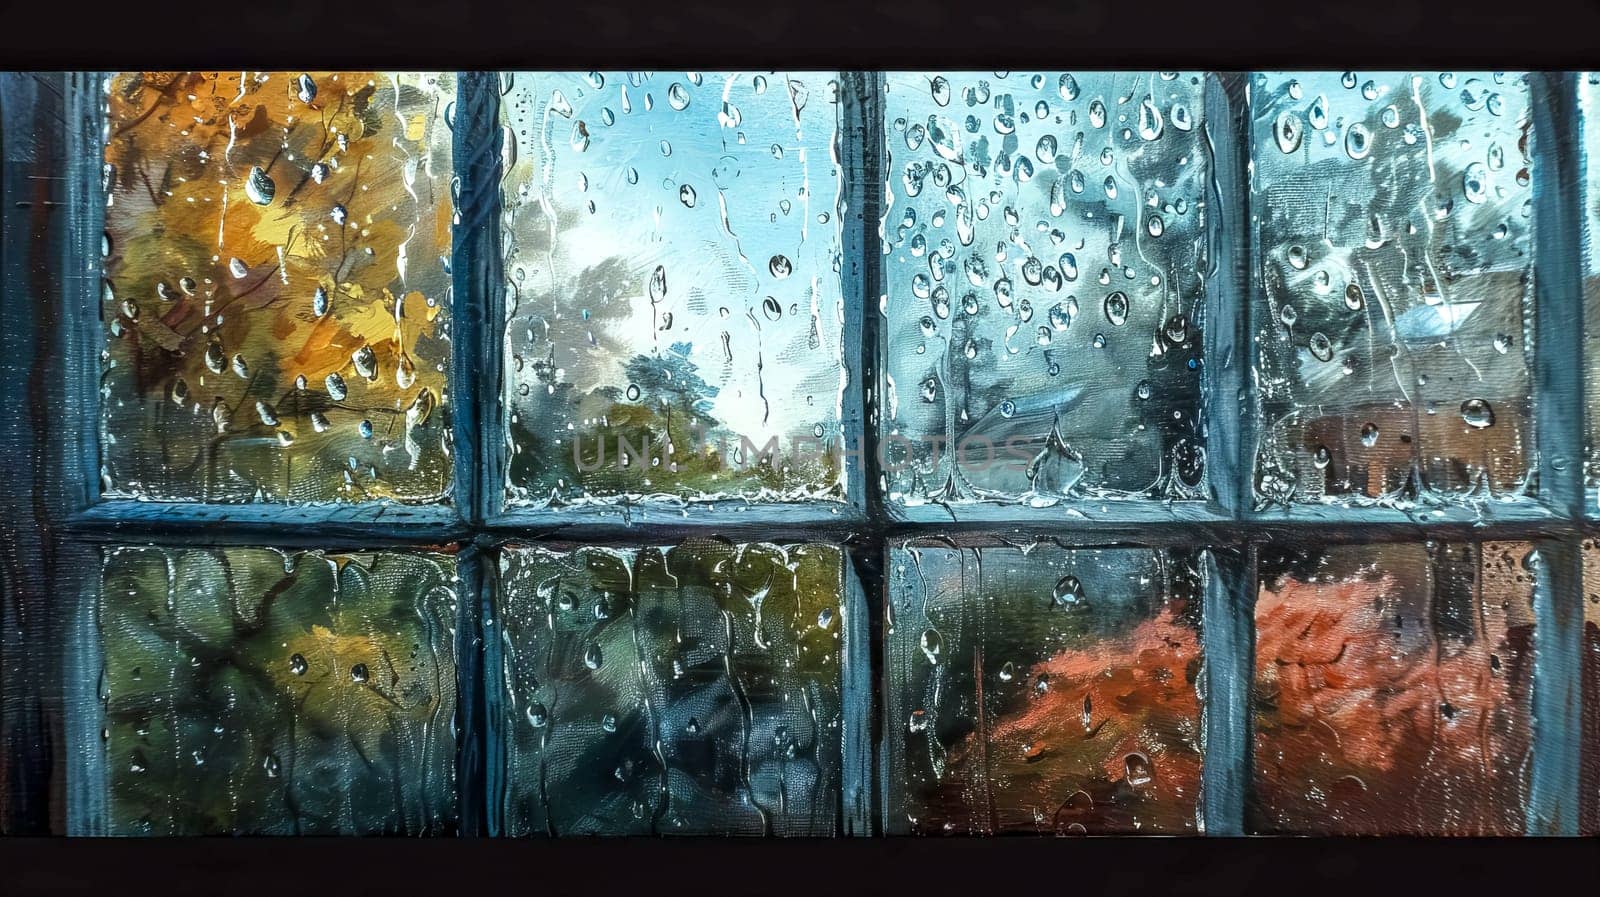 Autumn rain on vintage window pane by Edophoto